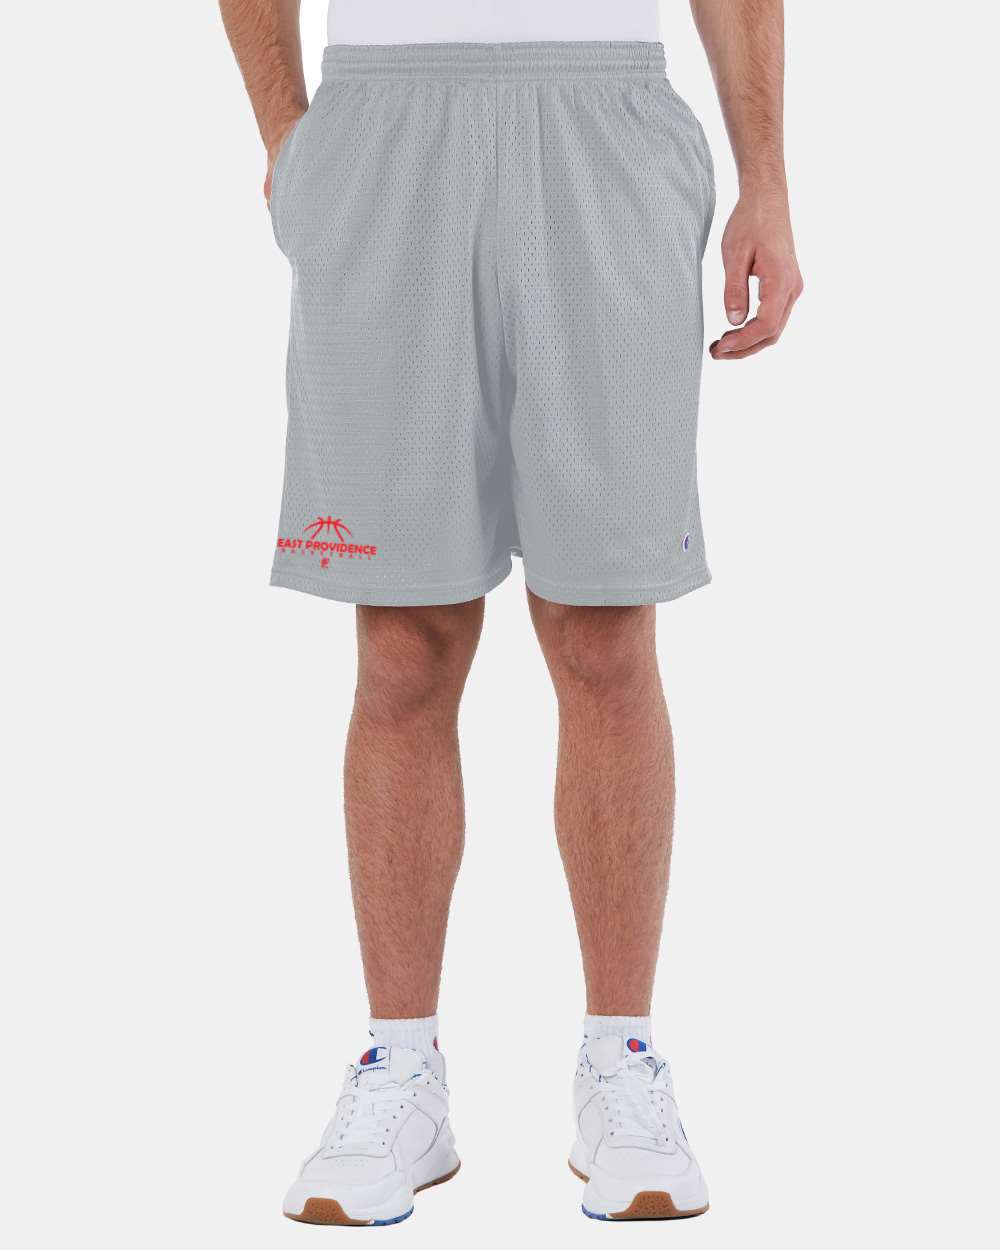 East Providence Basketball Mesh Shorts Grey